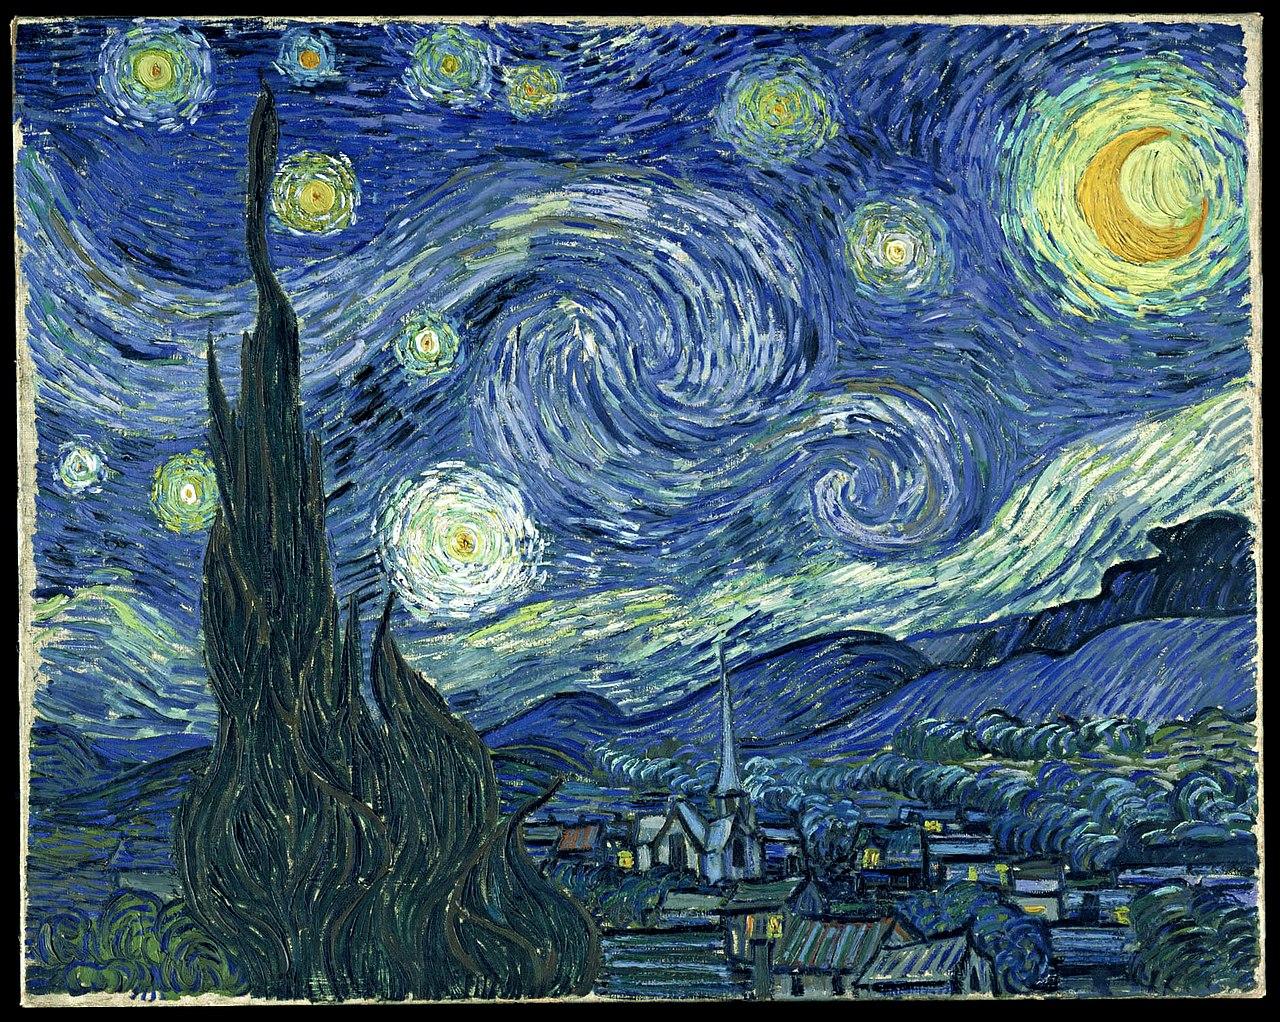 The Starry Night, June 1889. Museum of Modern Art, New York